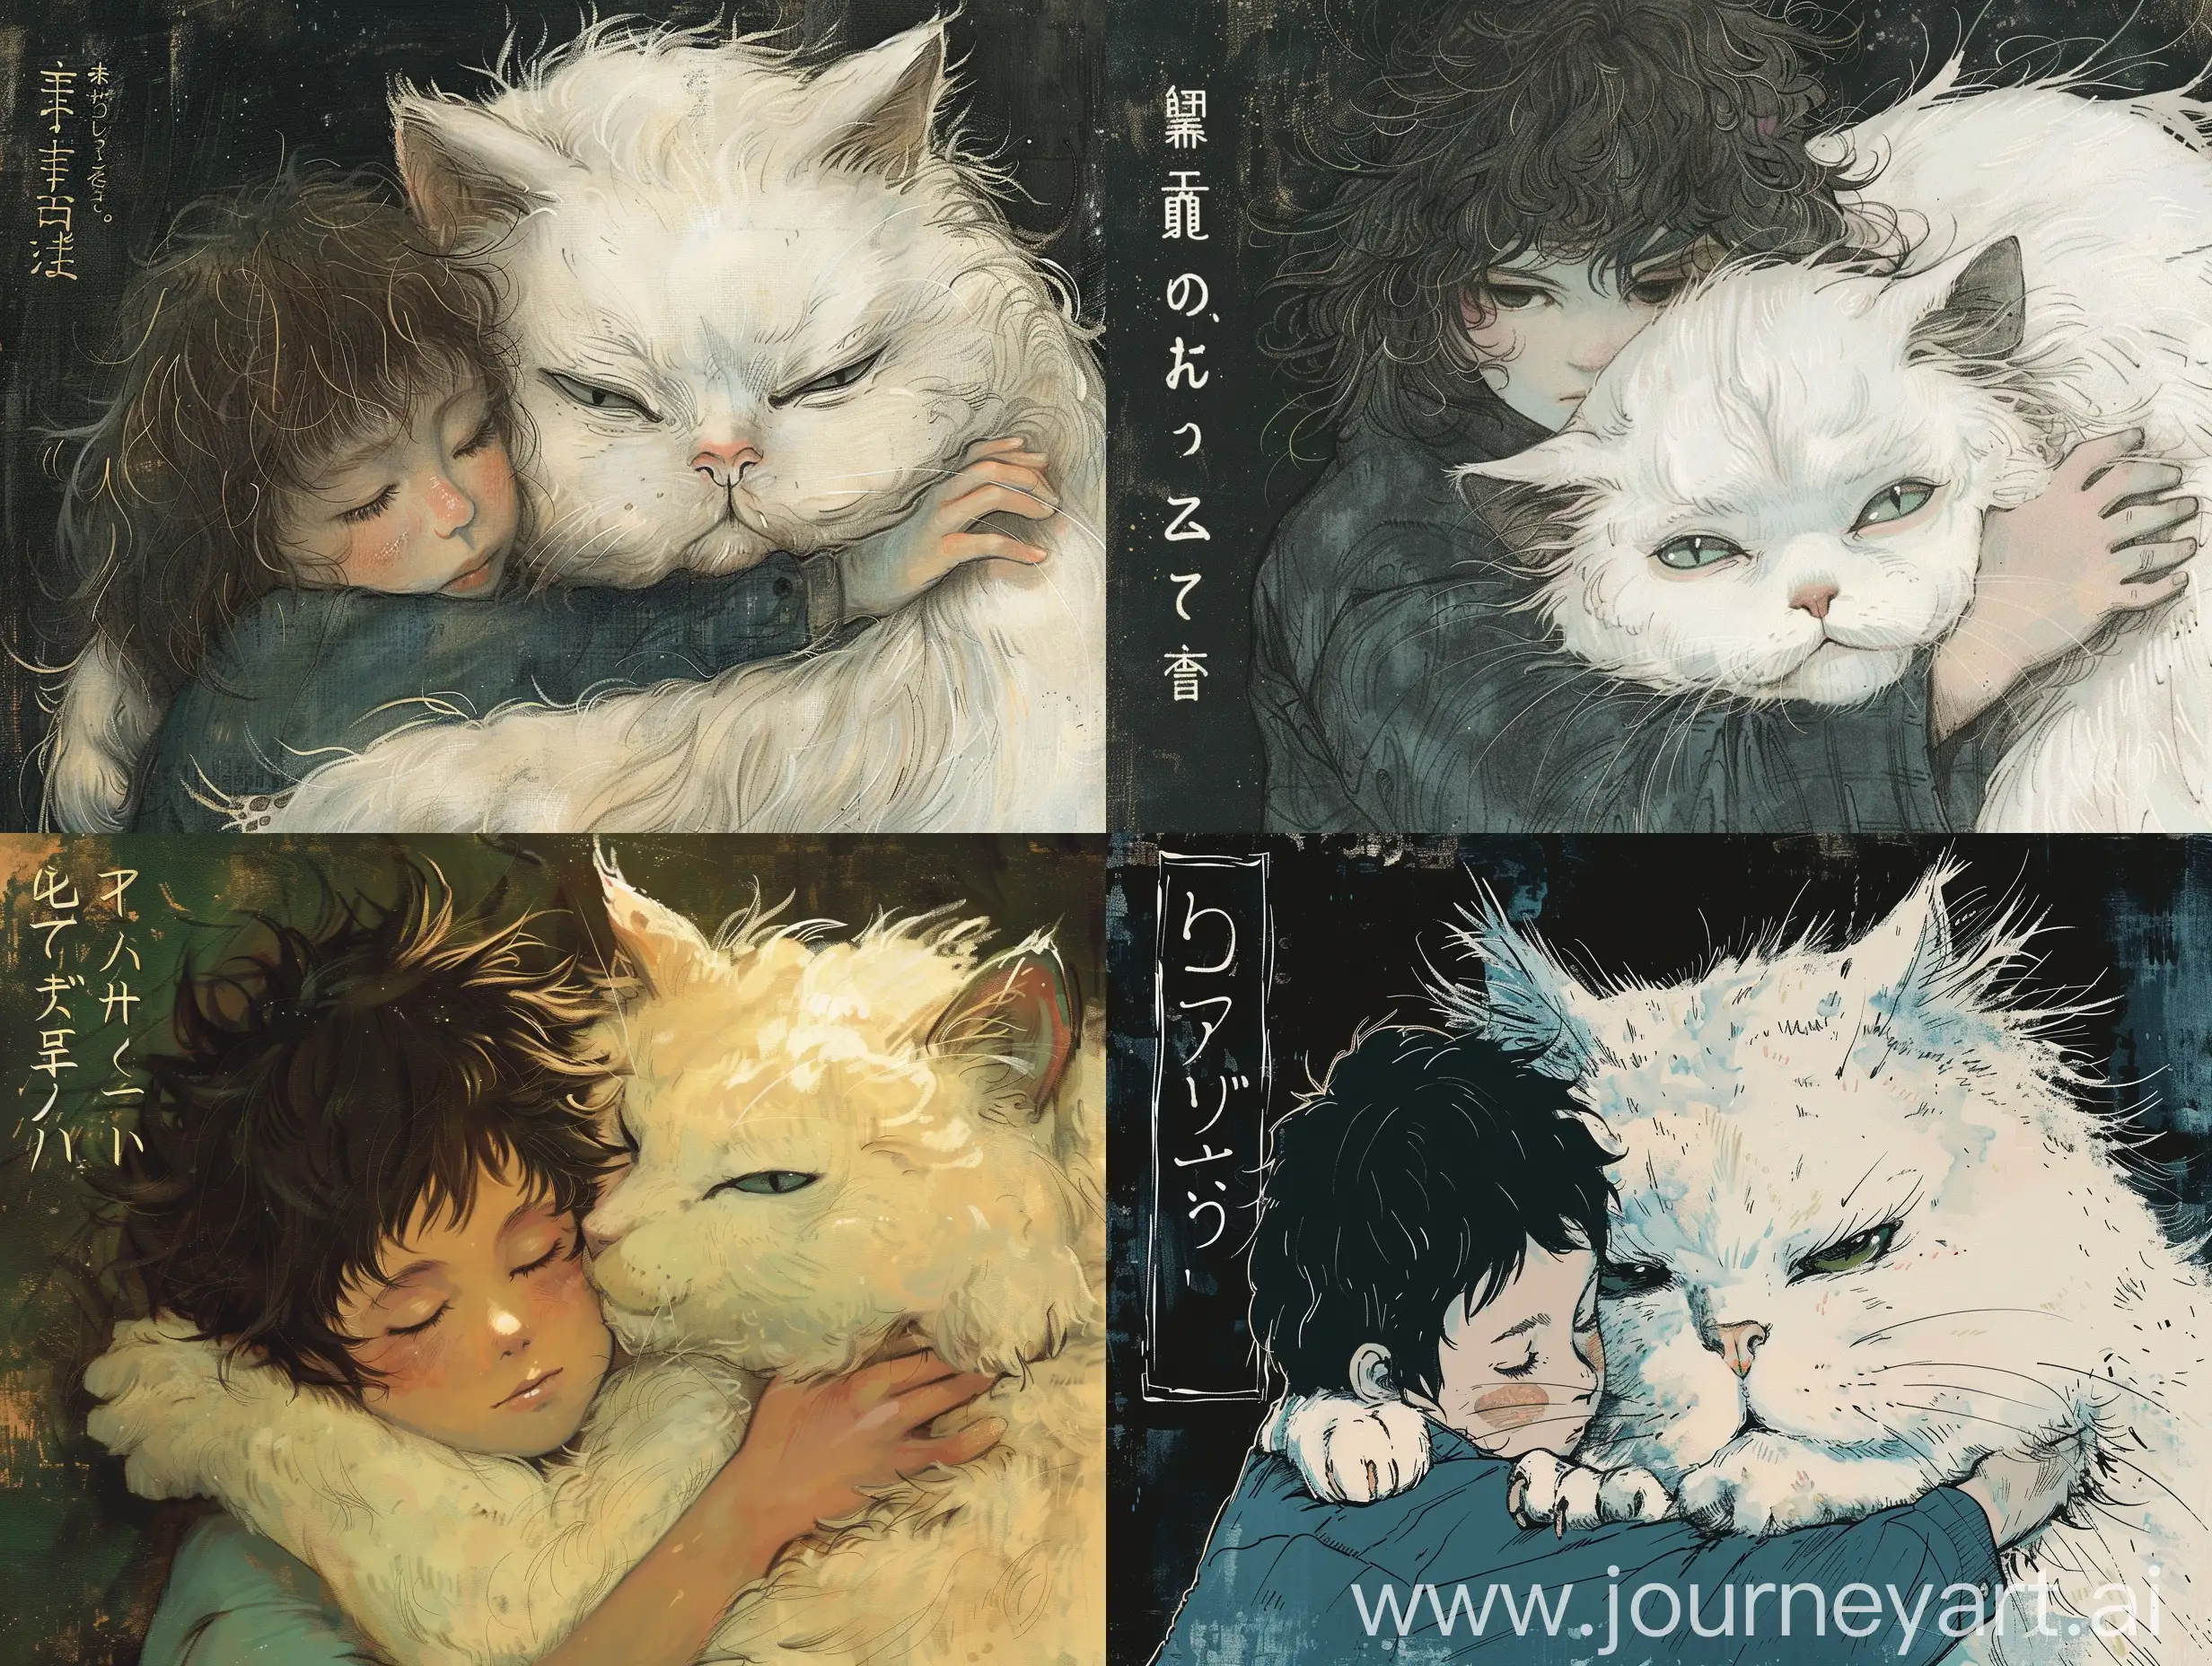 Boy-Embracing-Fluffy-White-Cat-Illustration-by-Taiyo-Matsumoto